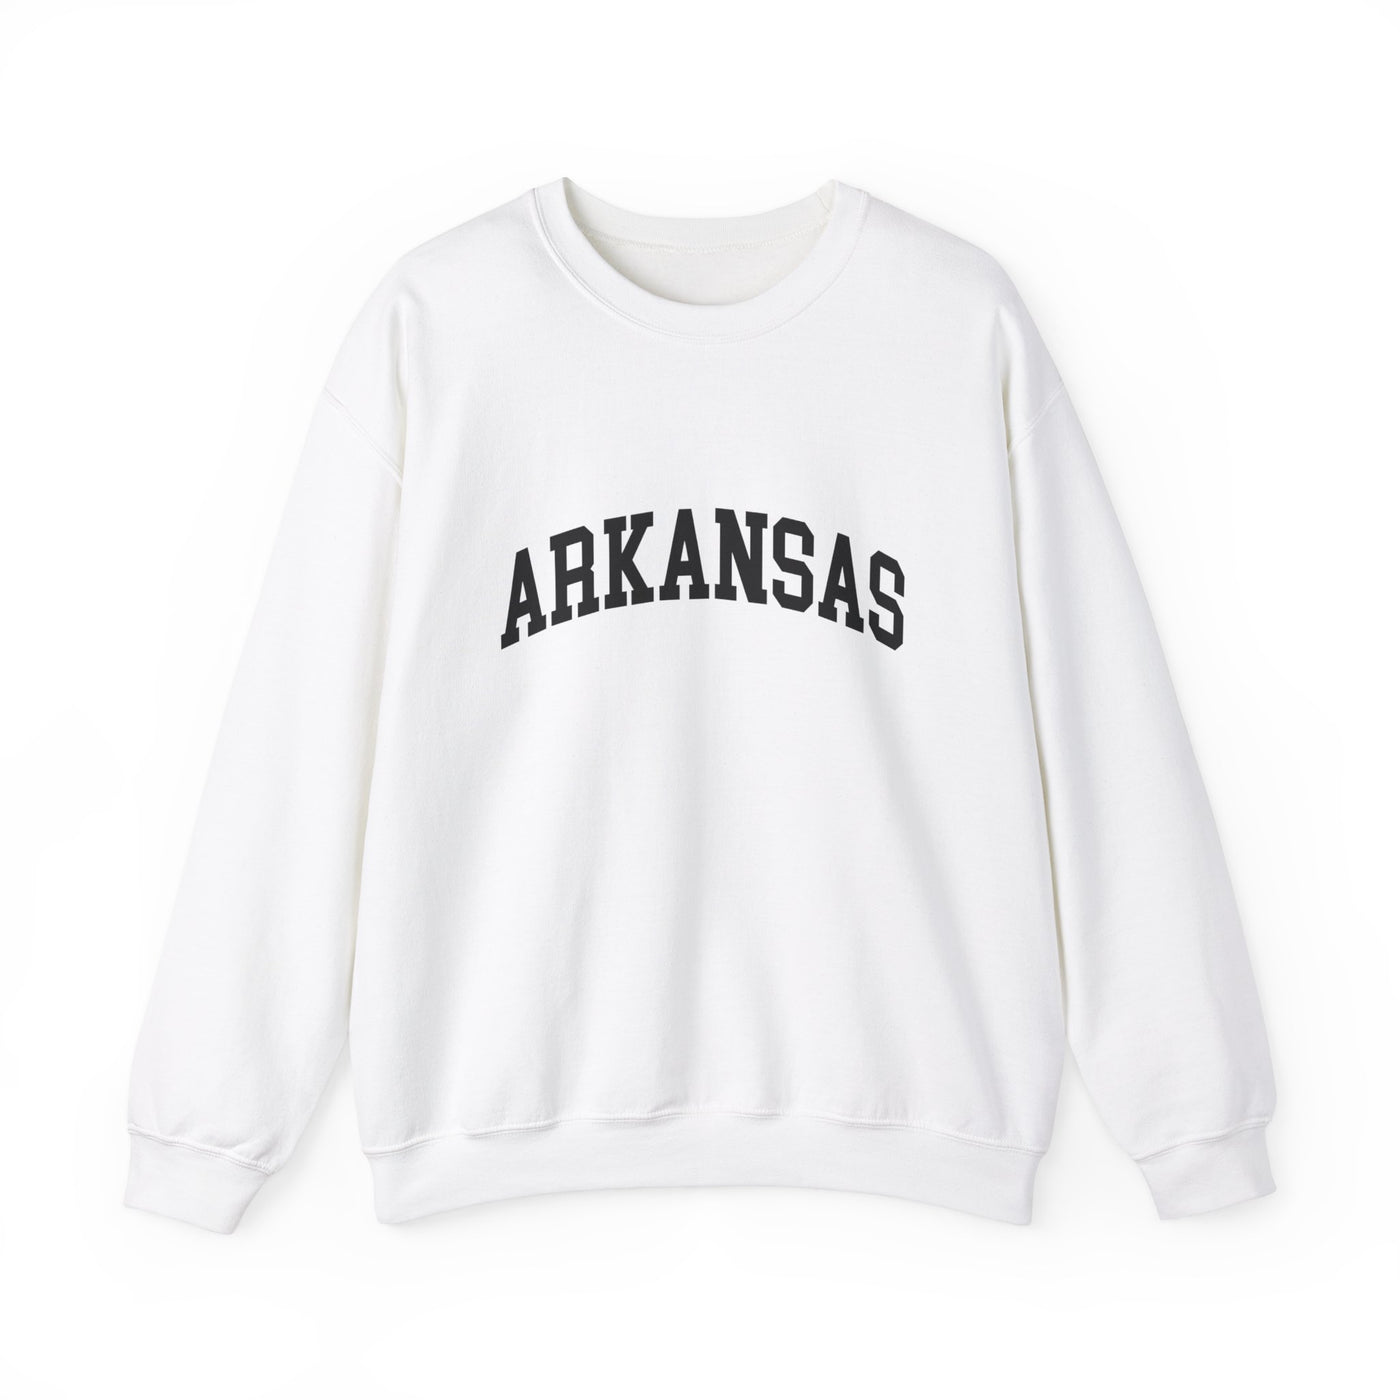 Arkansas Collegiate Crewneck Sweatshirt